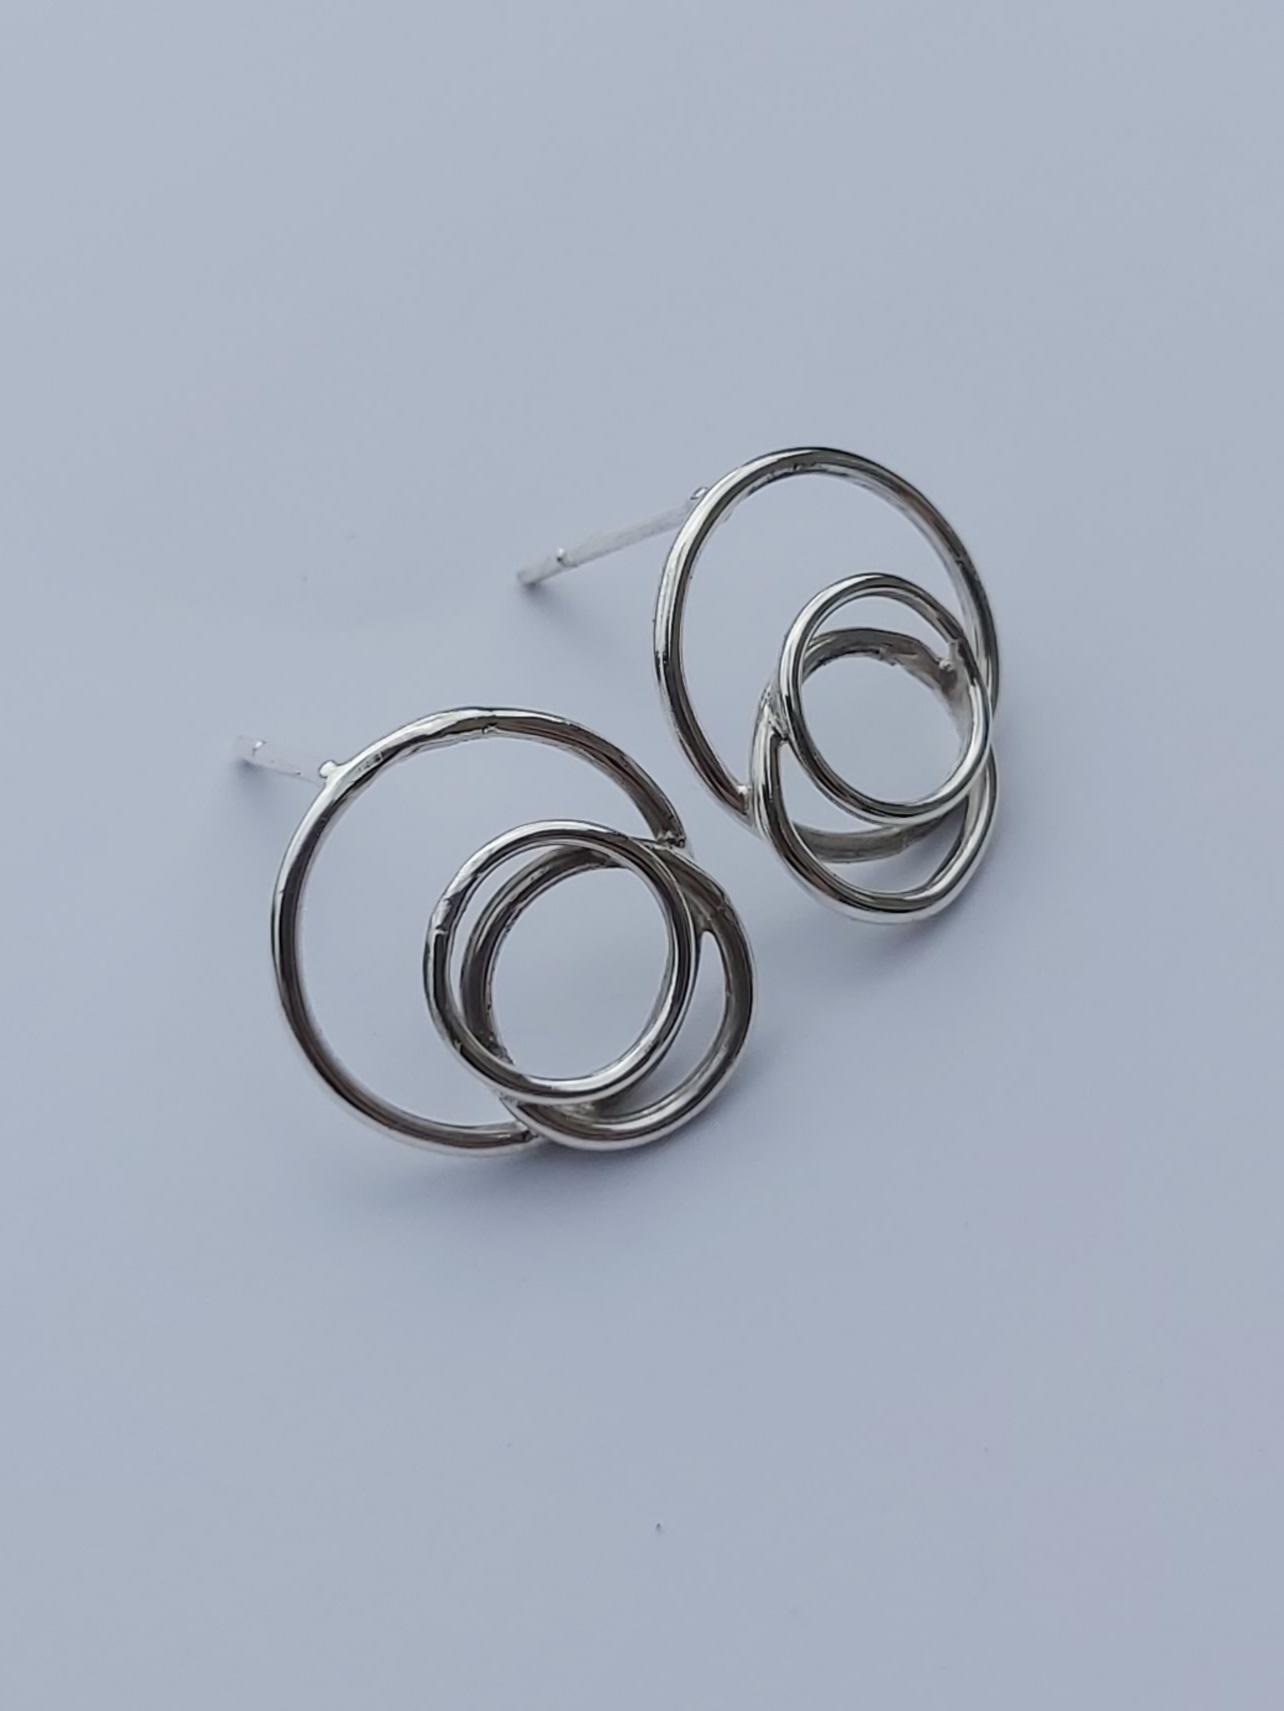 Sterling Silver Circles Stud Earrings